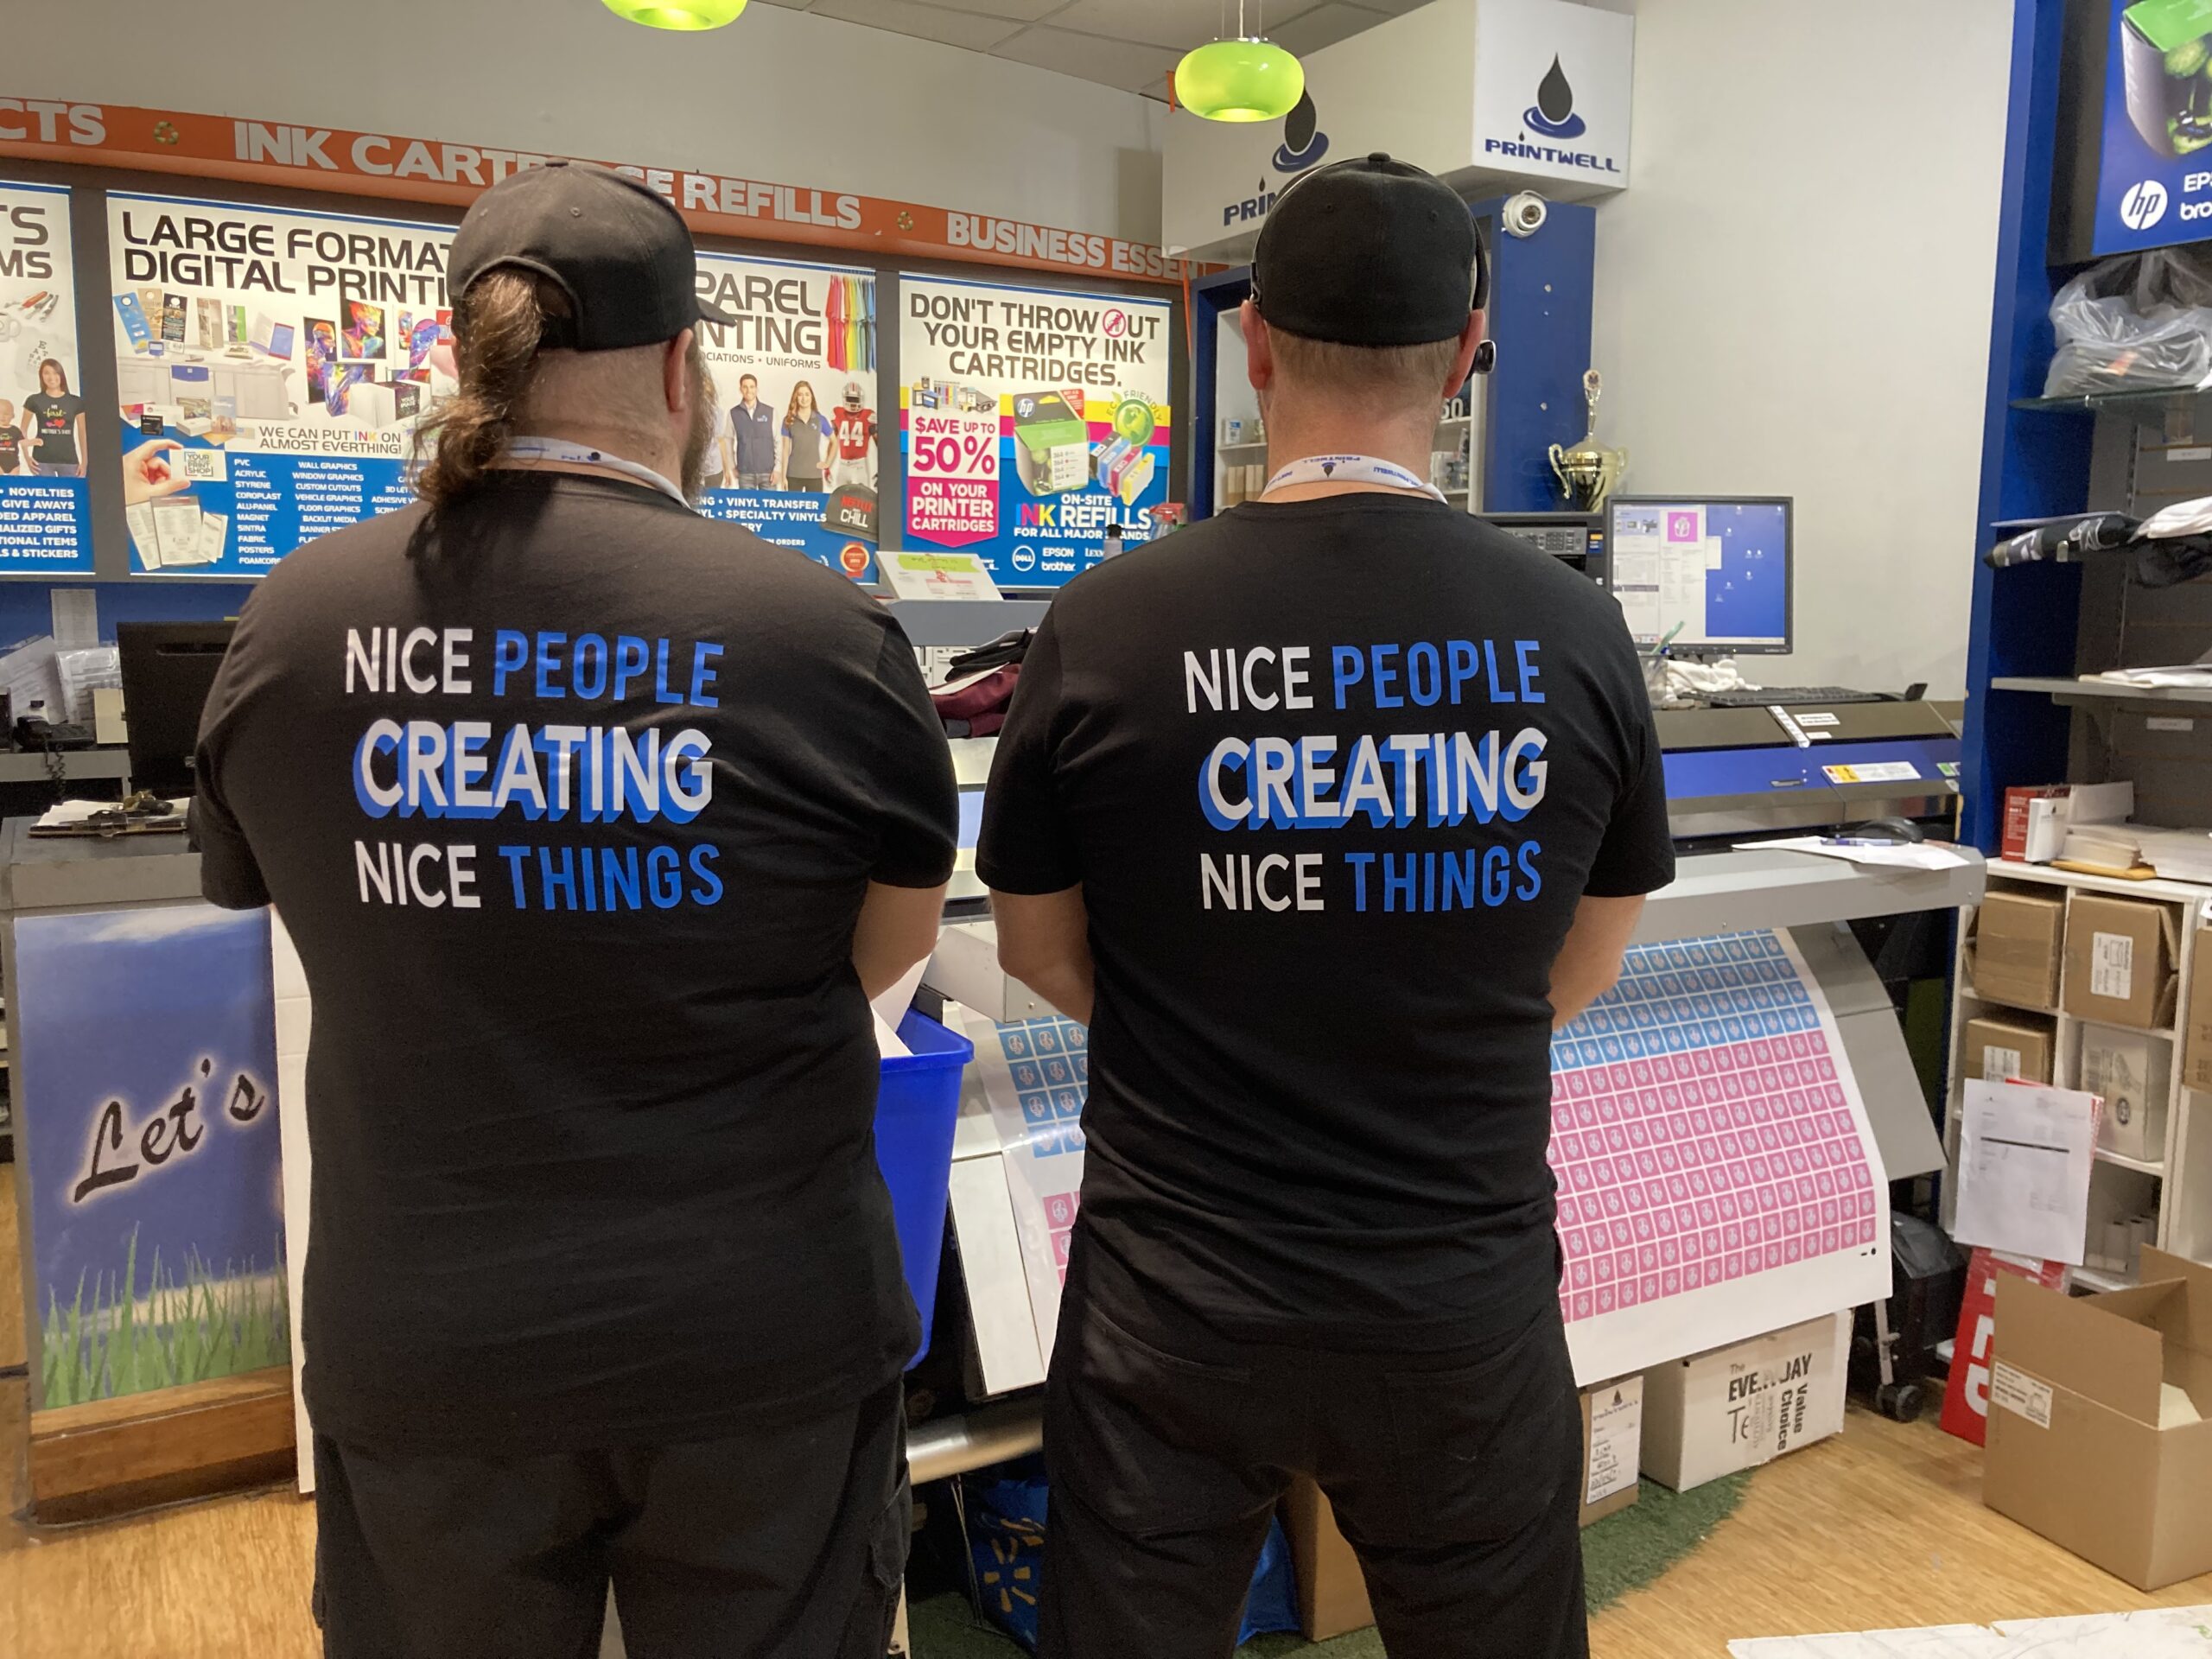 We are a printing company where nice people create nice things!